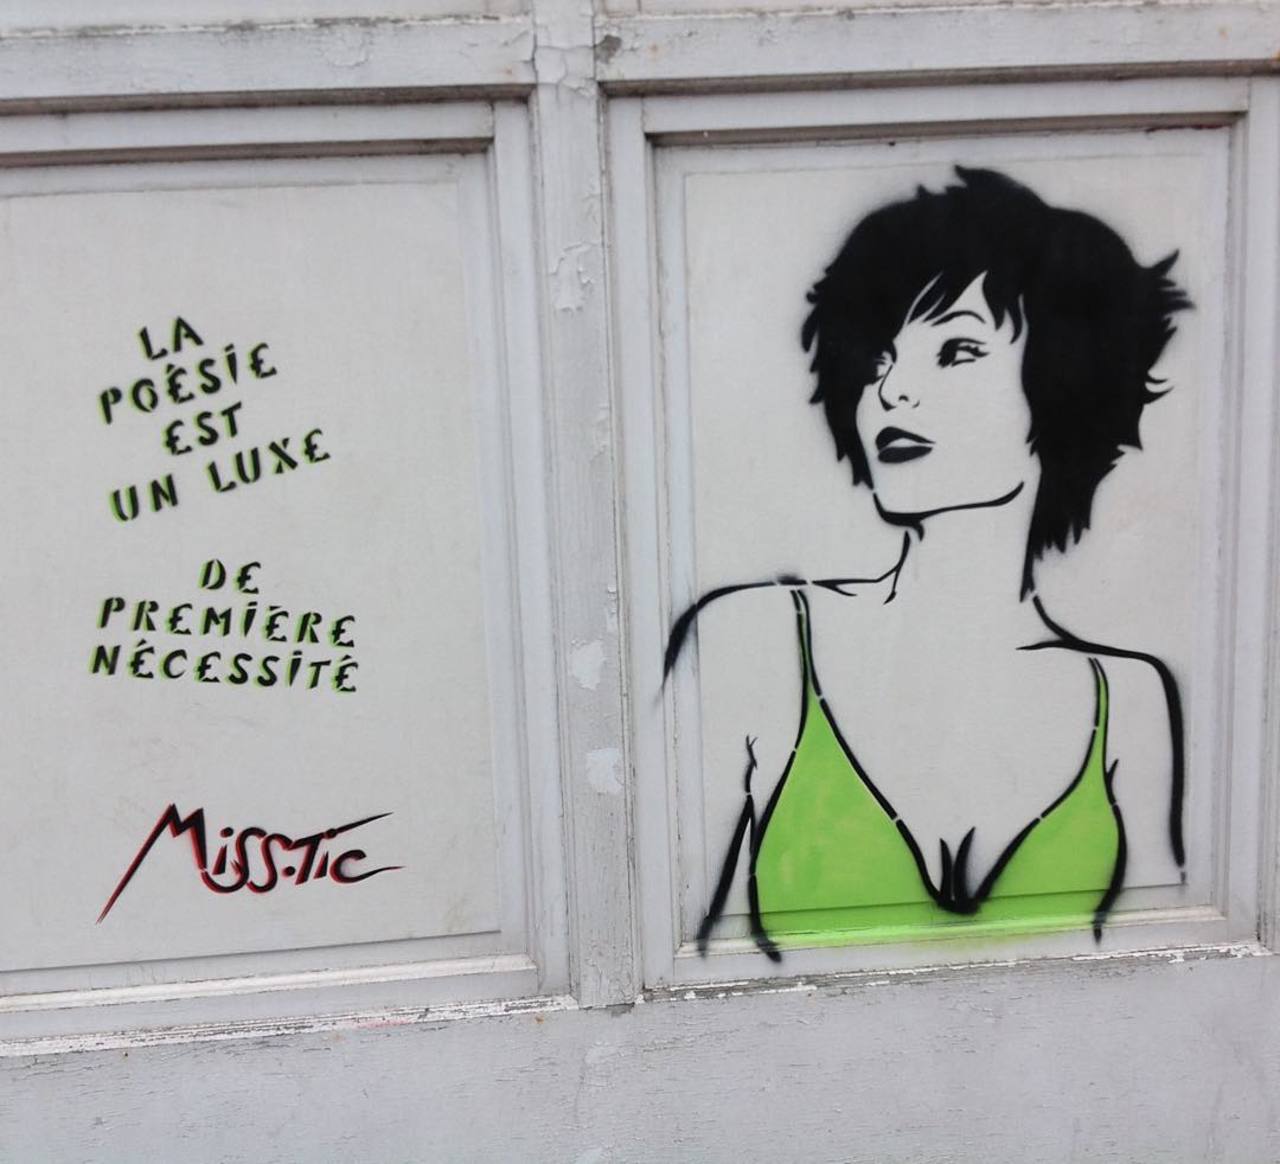 #Paris #graffiti photo by @stefetlinda http://ift.tt/1LhC7ey #StreetArt http://t.co/godGFDfdAE